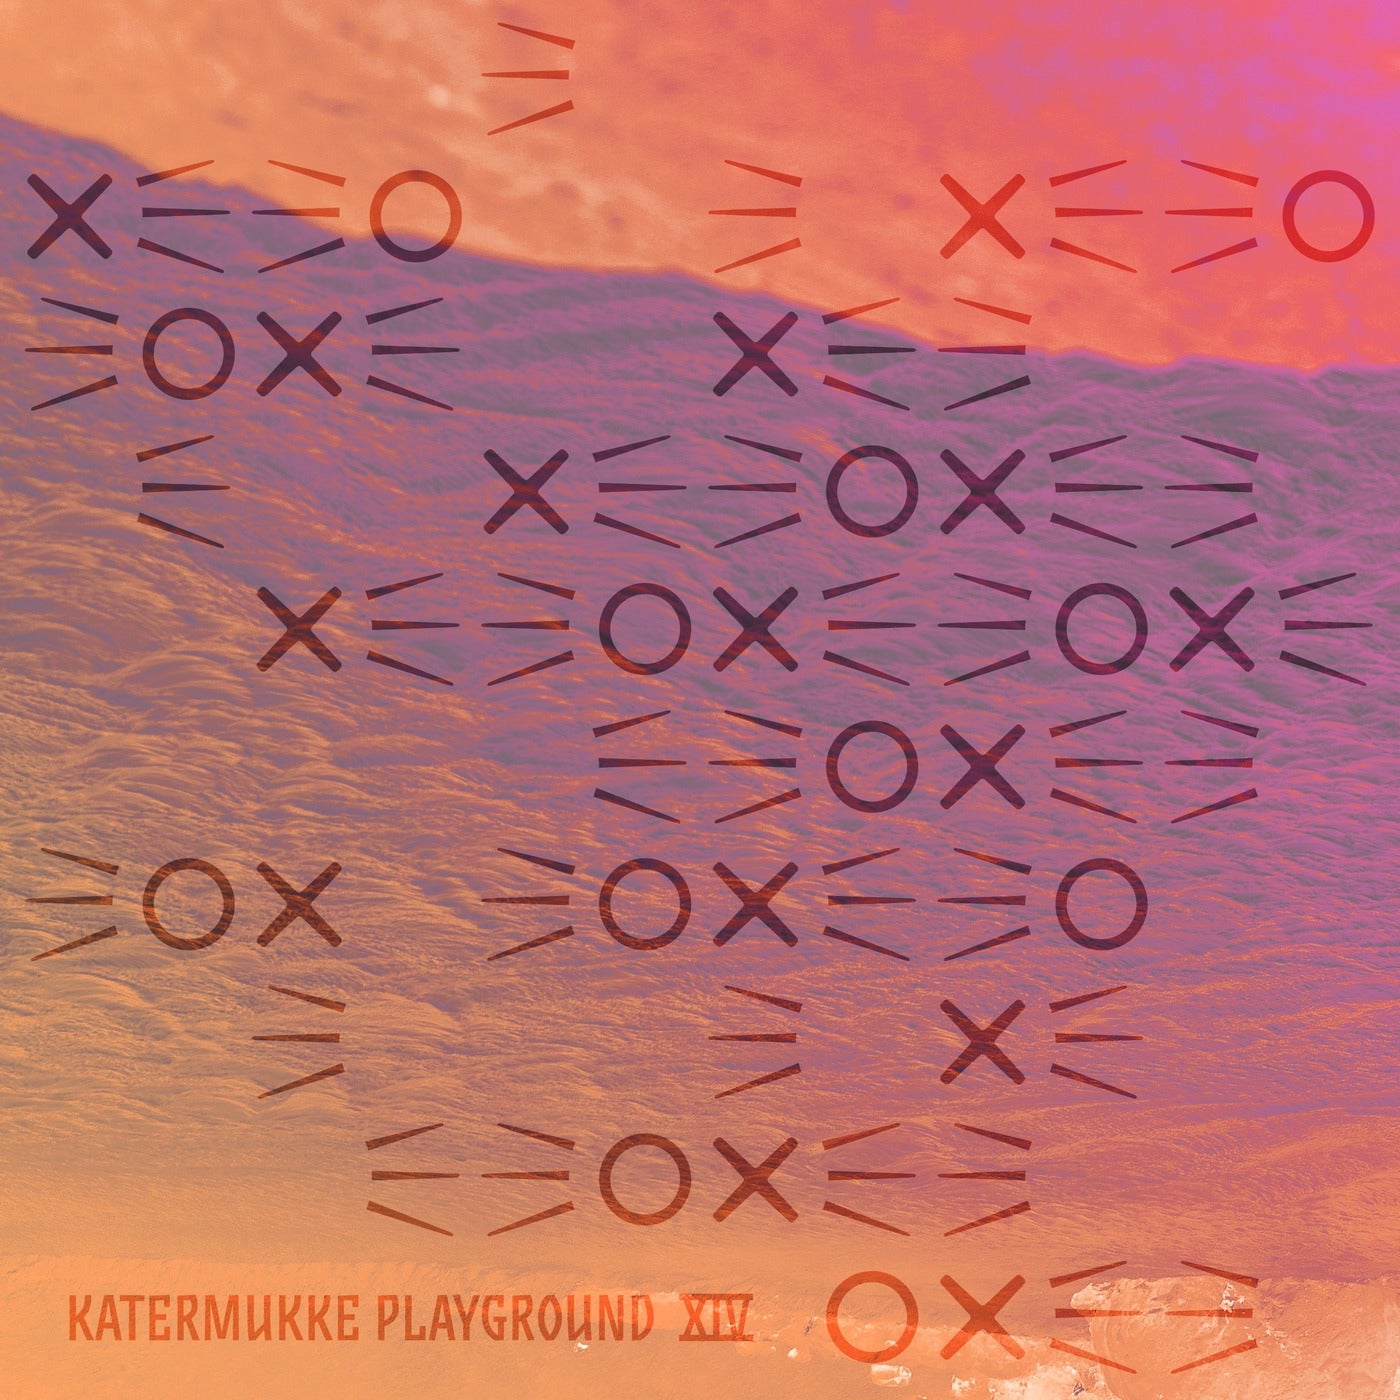 Download Katermukke Playground XIV on Electrobuzz